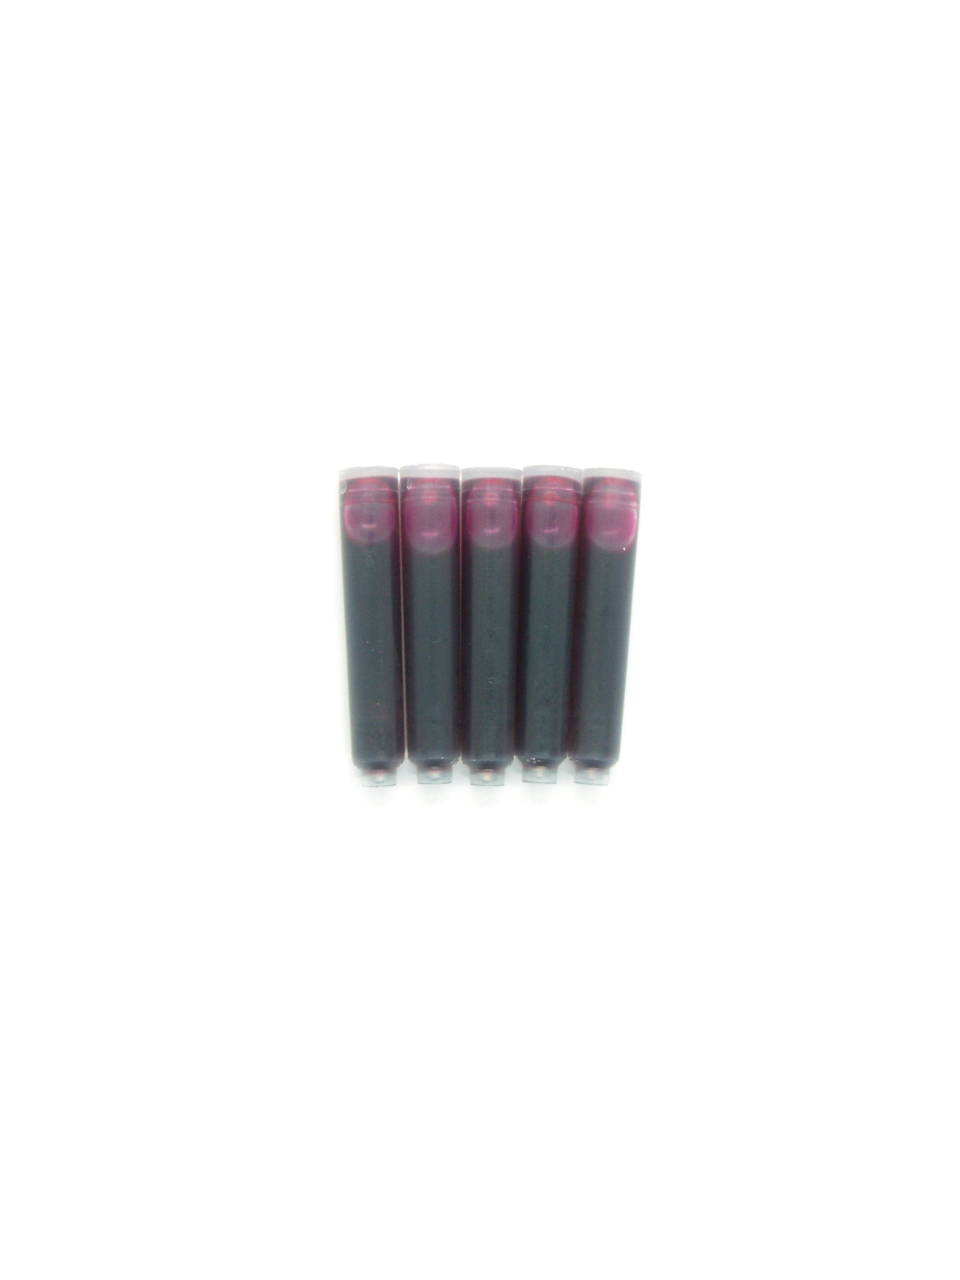 PenConverter Ink Cartridges For Marlen Fountain Pens (Pink)